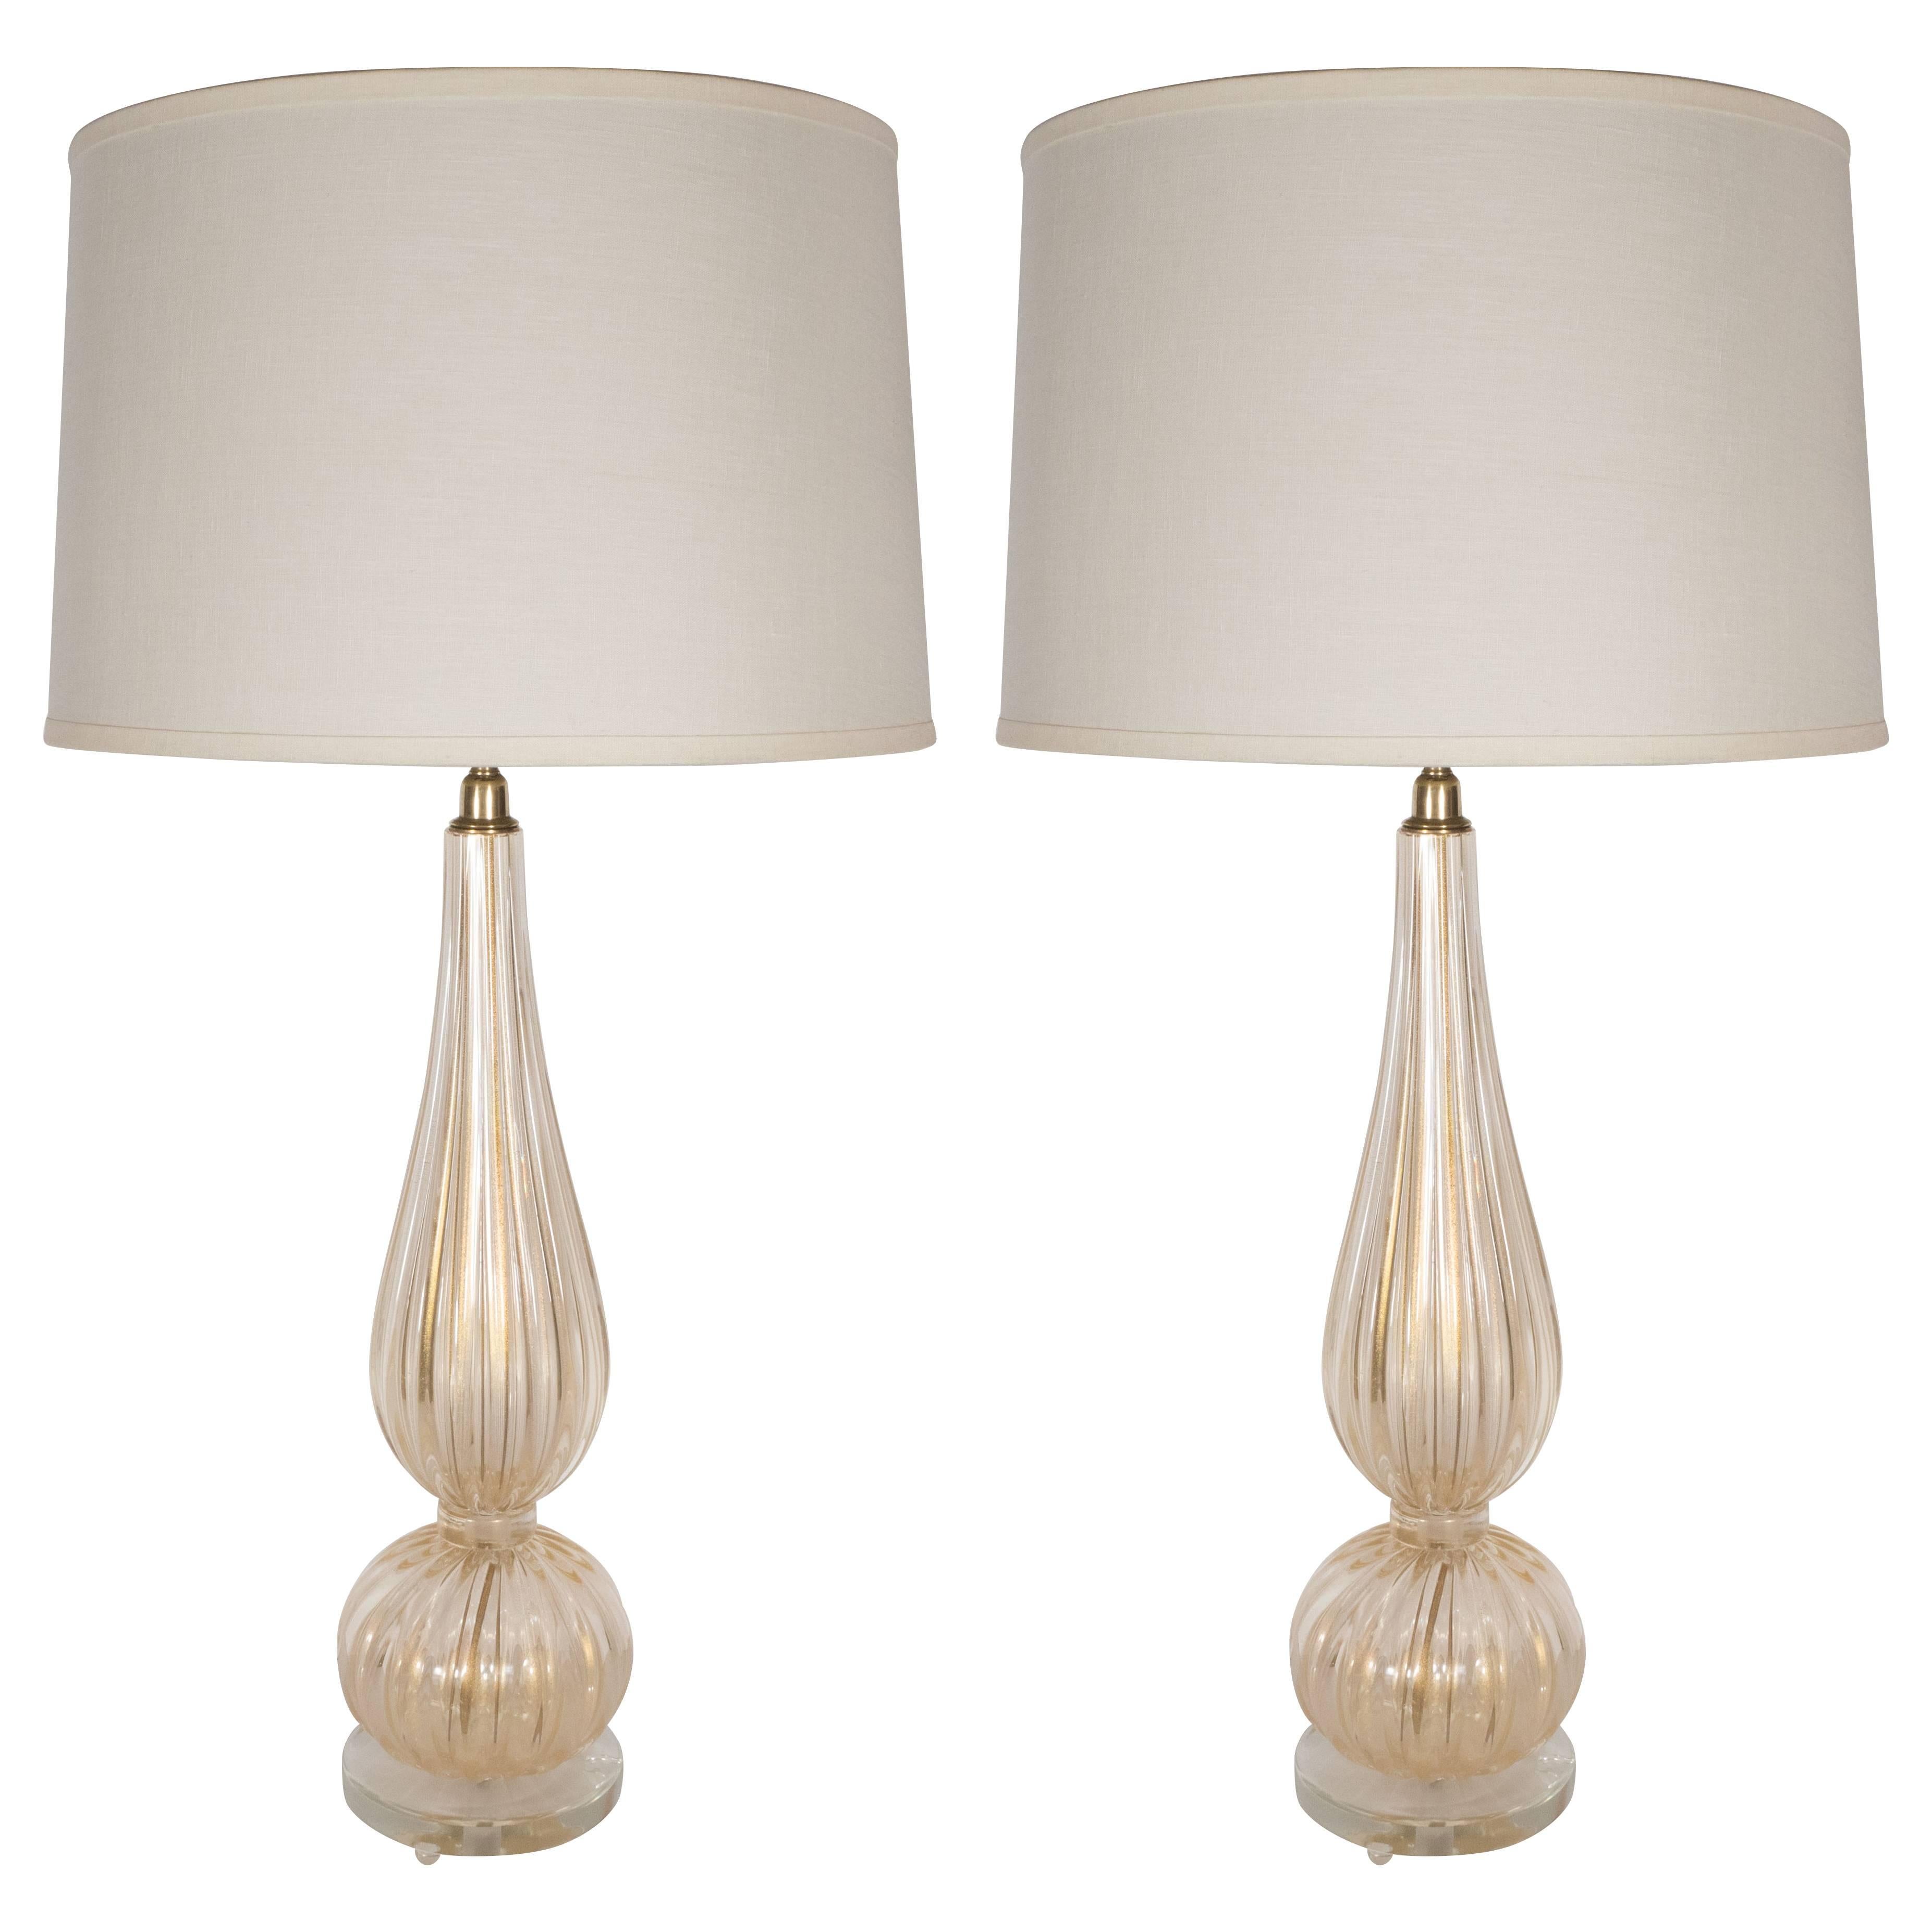 Pair of Modernist Handblown Murano Glass Table Lamps with 24-Karat Gold Flecks